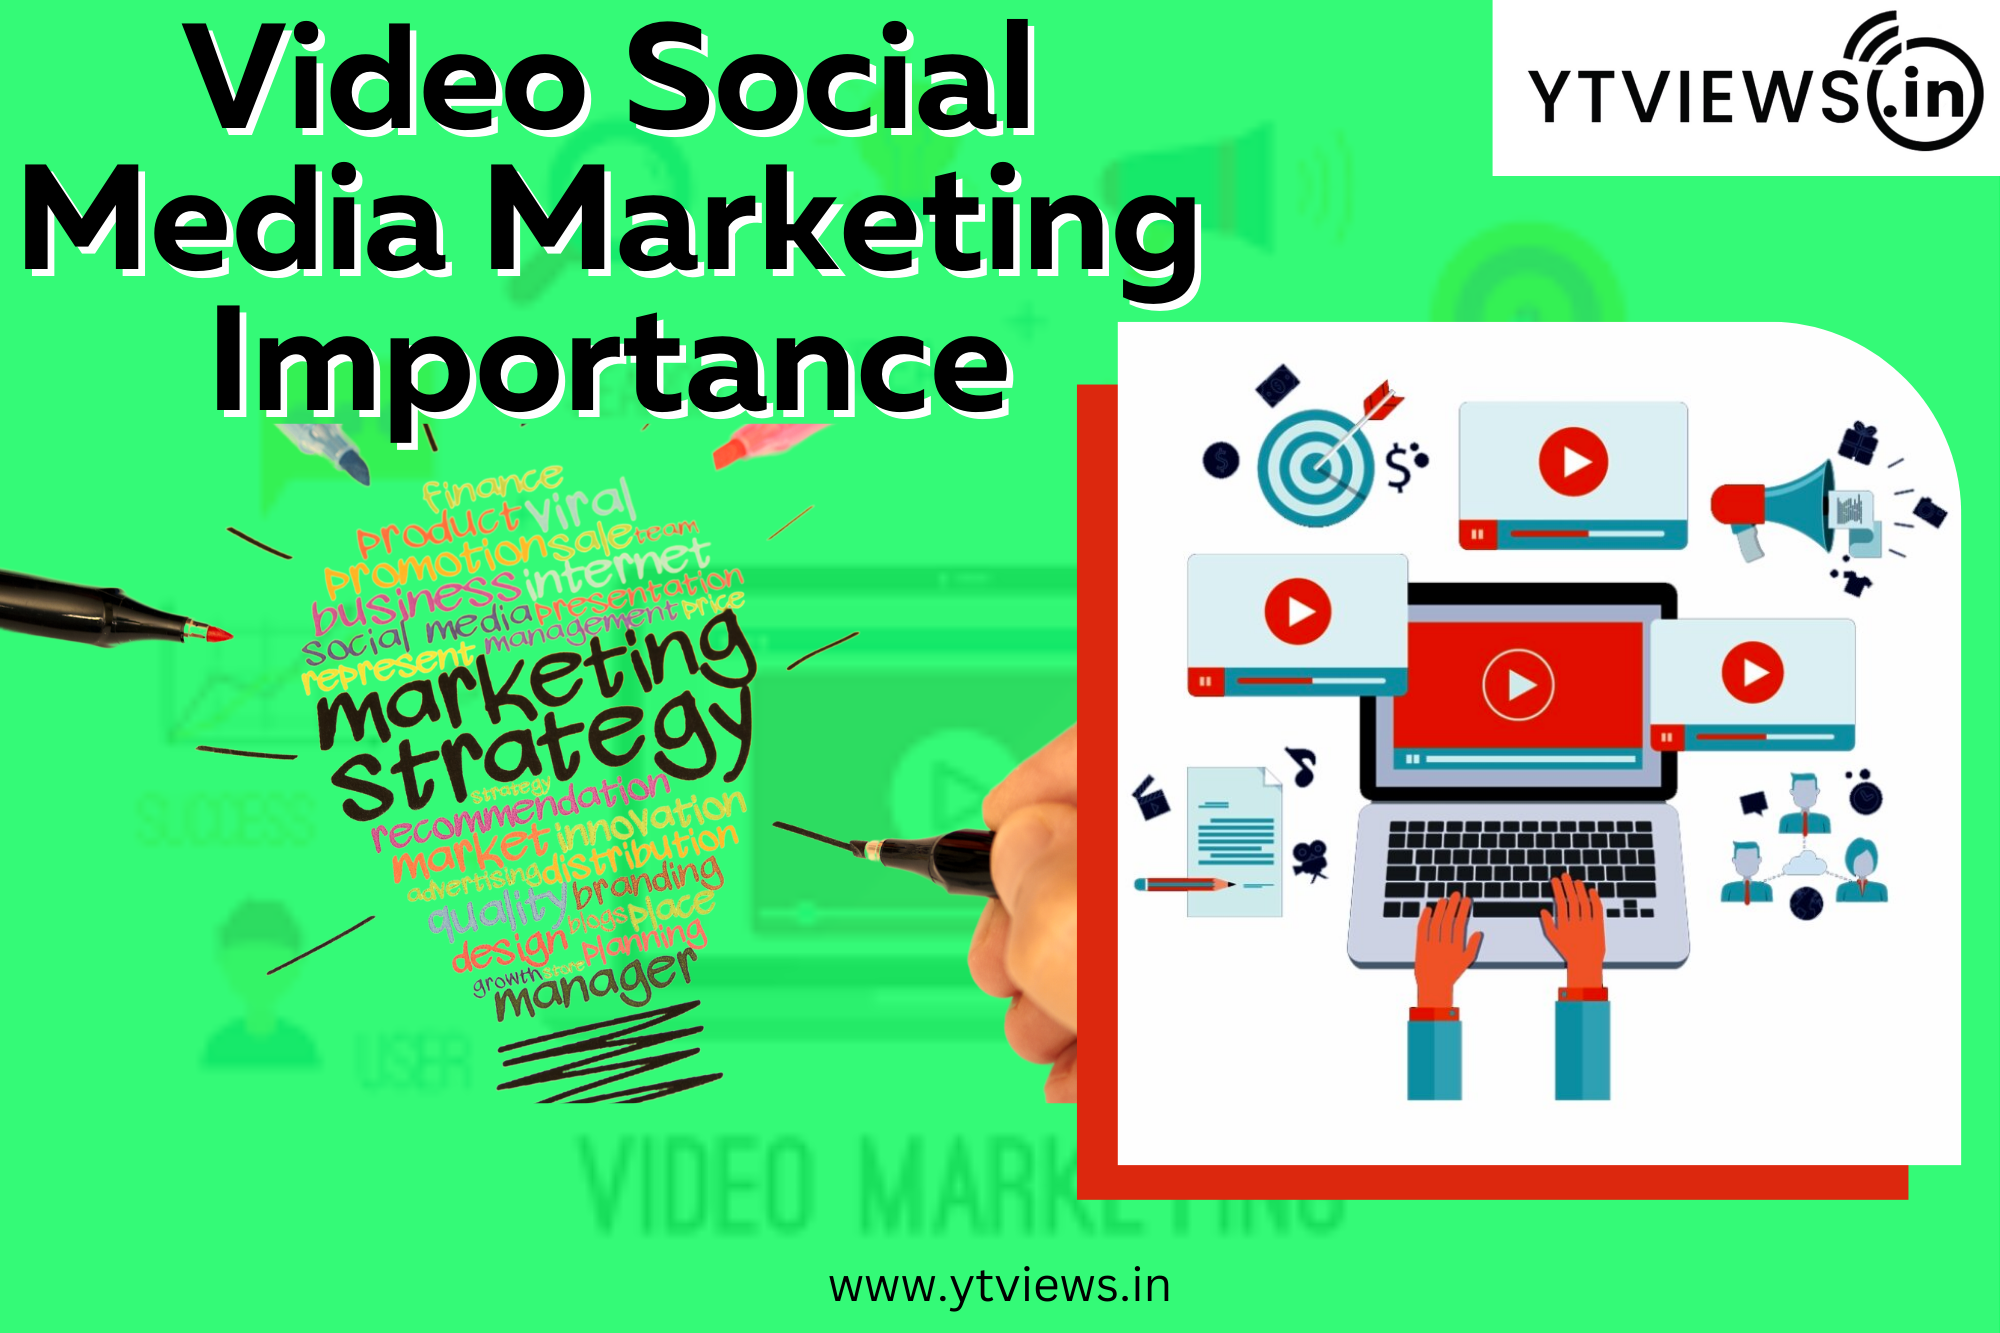 Why should you pursue Video Social Media Marketing?